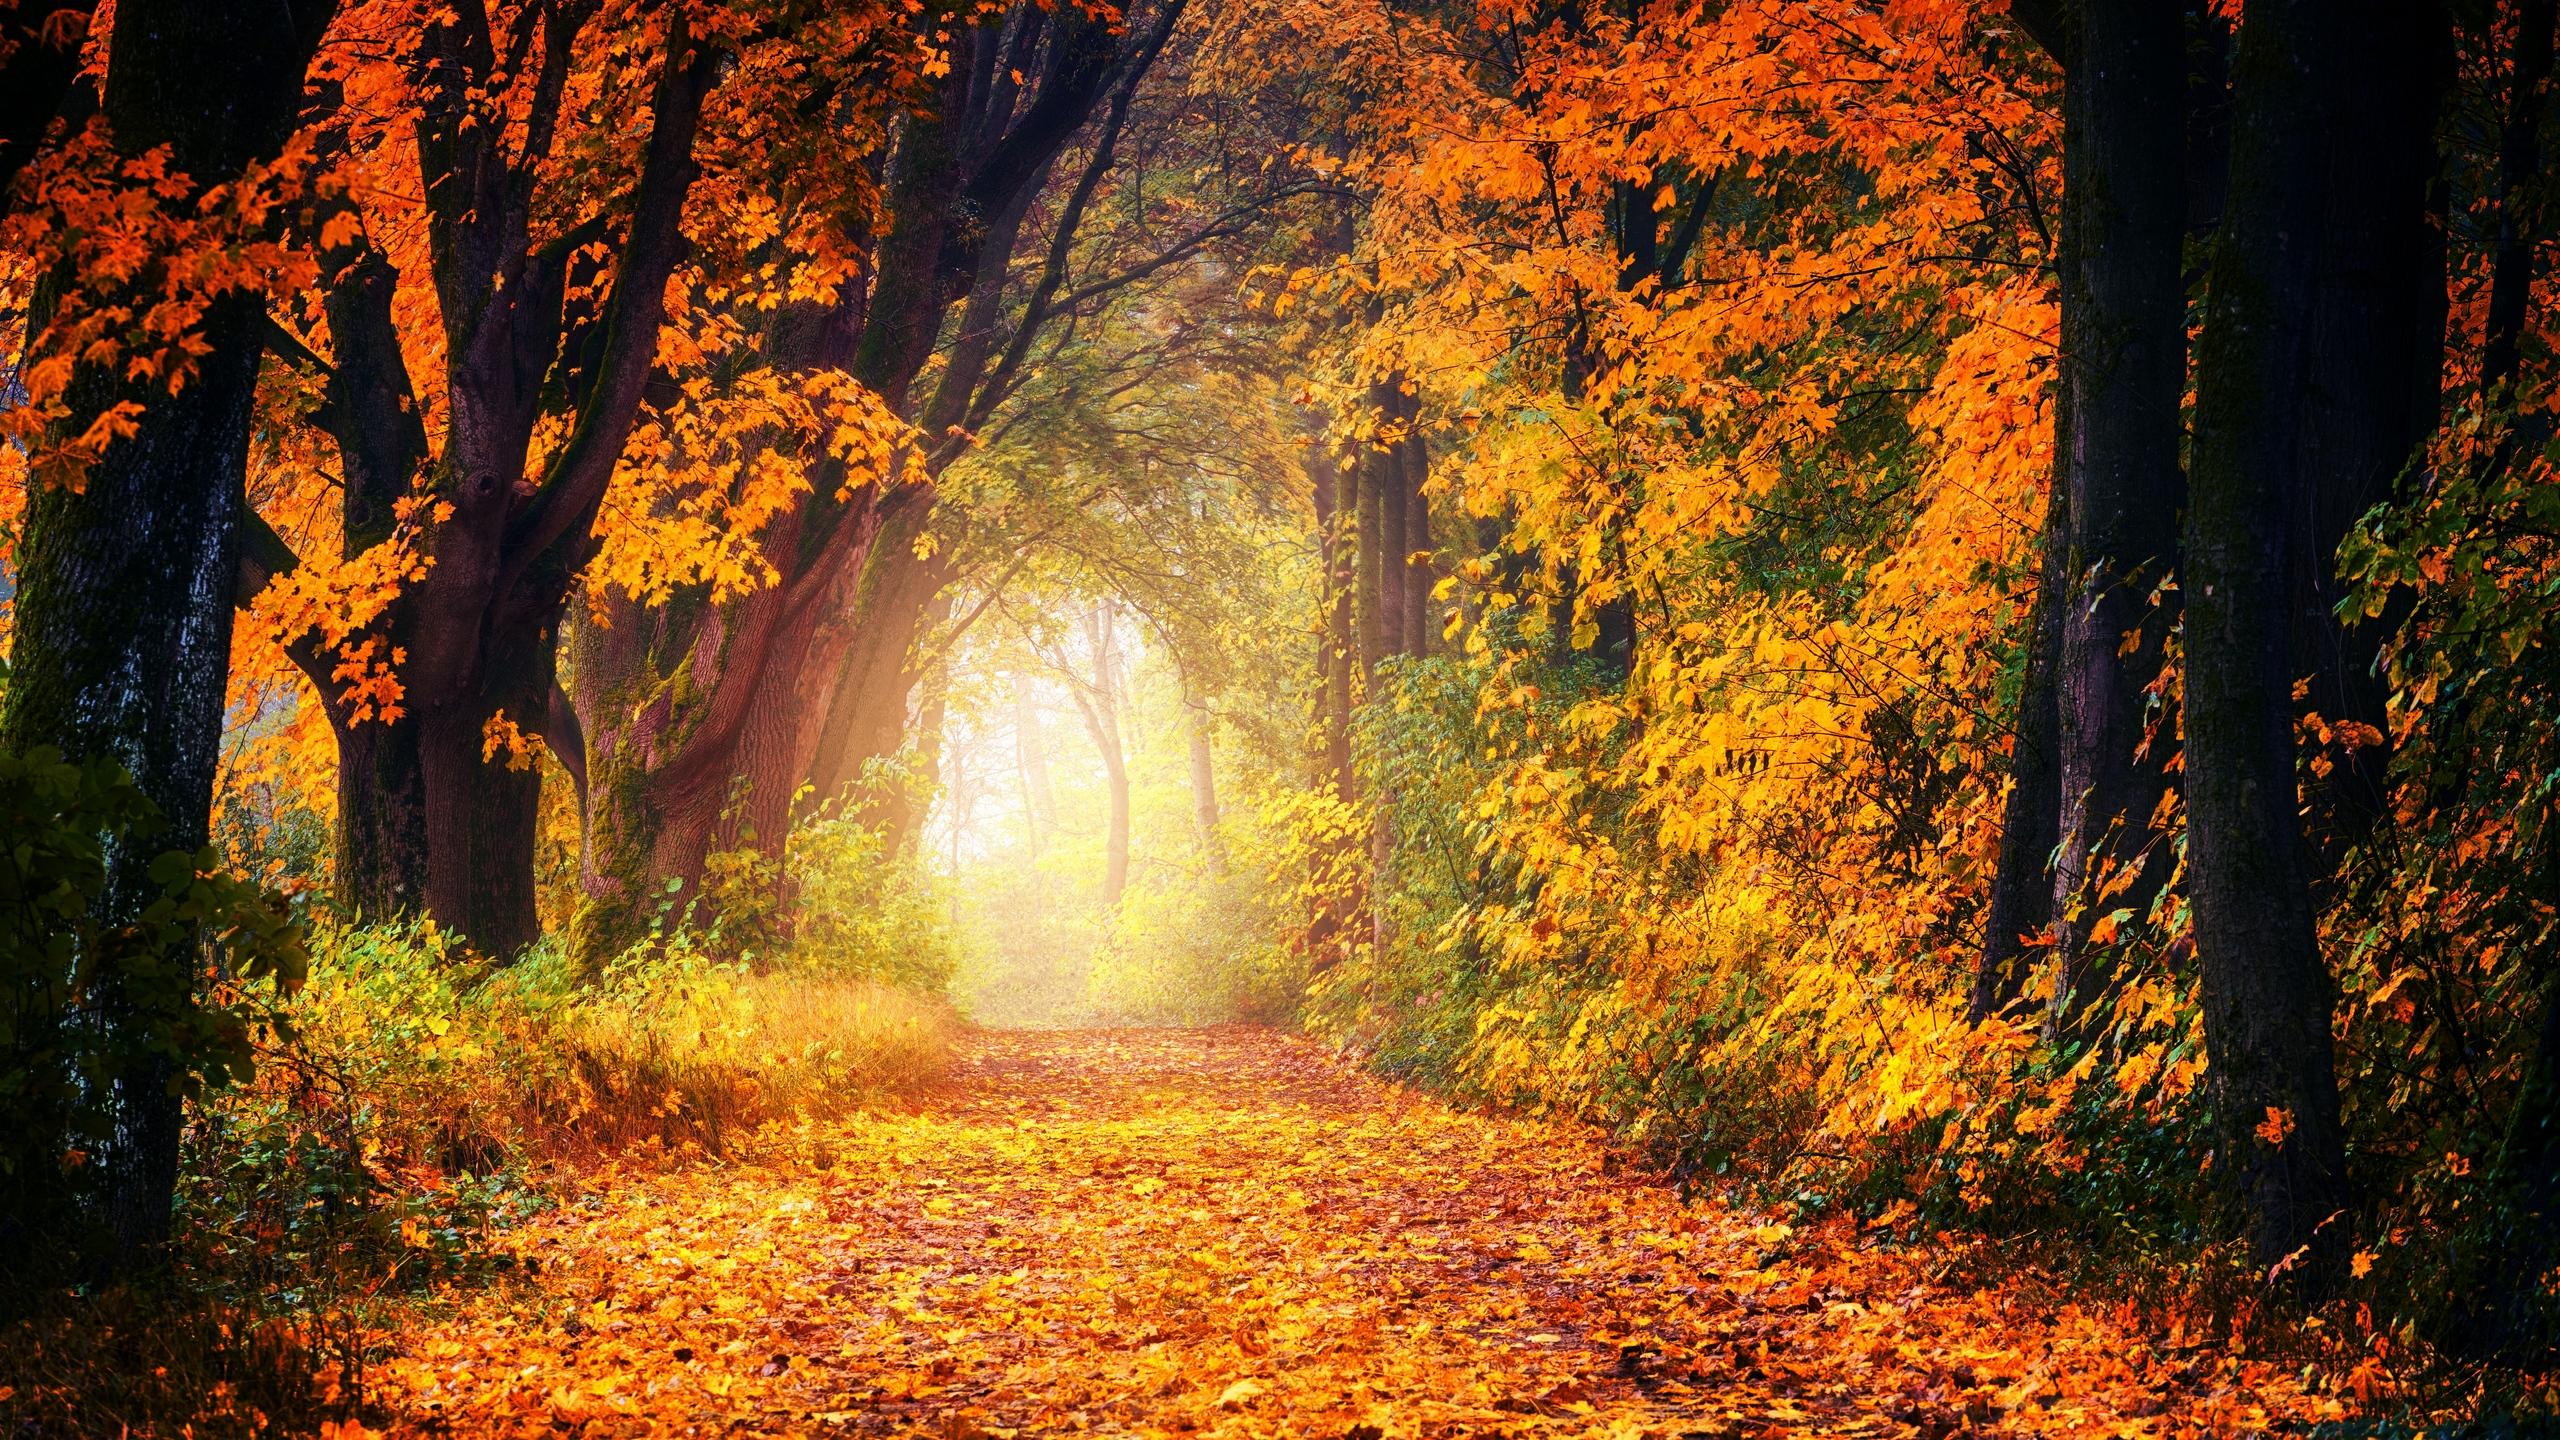 Download wallpaper 2560x1440 autumn, park, foliage, trees, path, light, golden widescreen 16:9 HD background